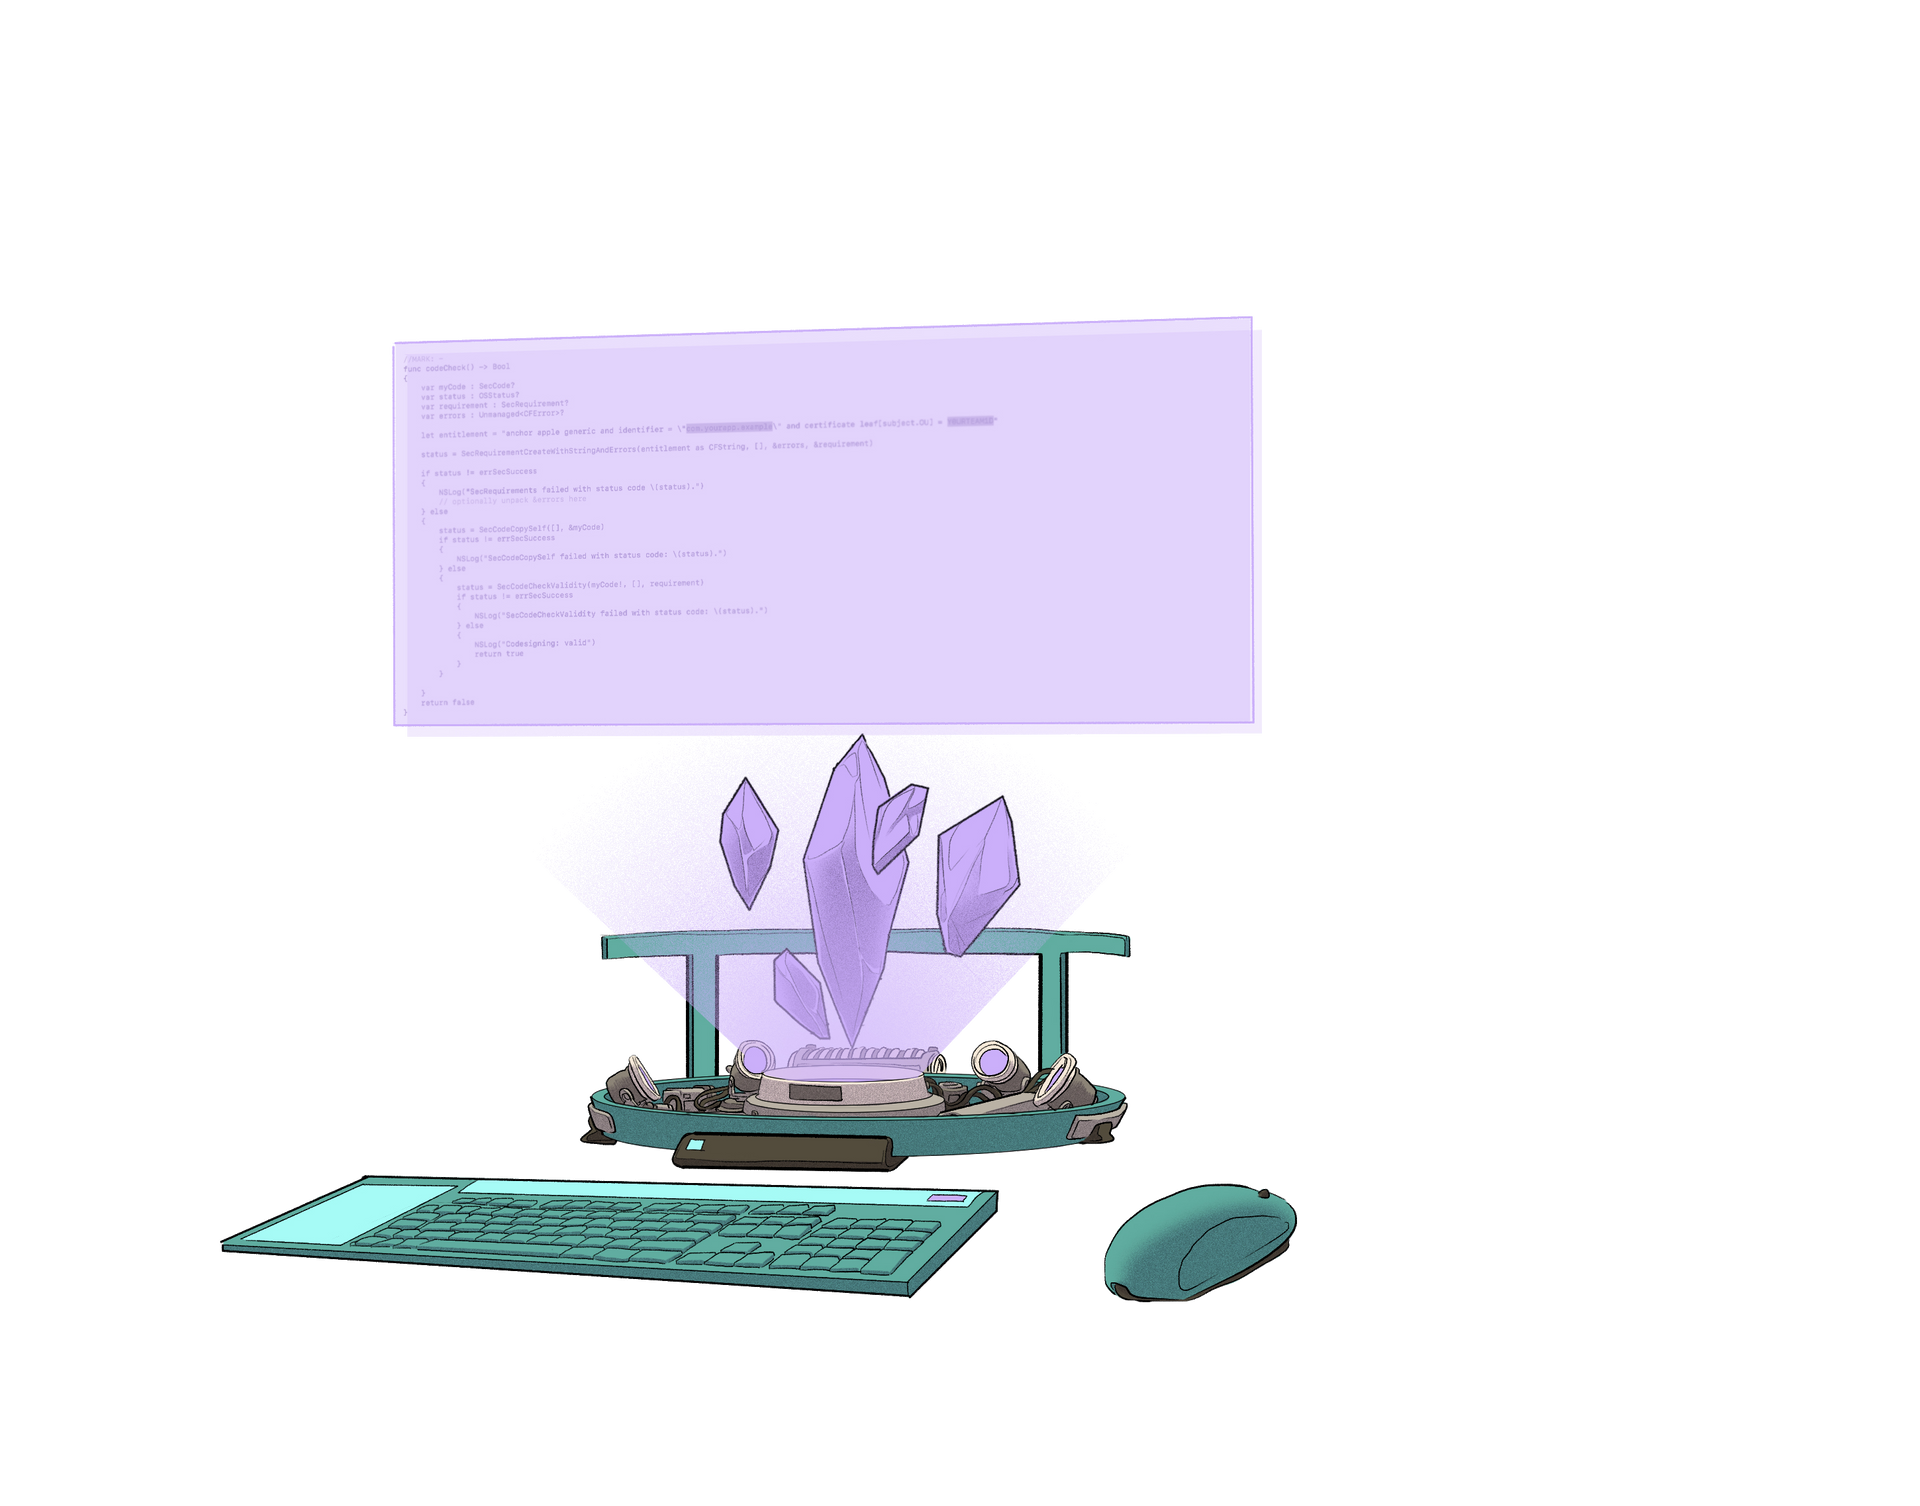 Ilustracija futuristične postavitve računalnika, ki ga poganjajo Ethereum kristali.